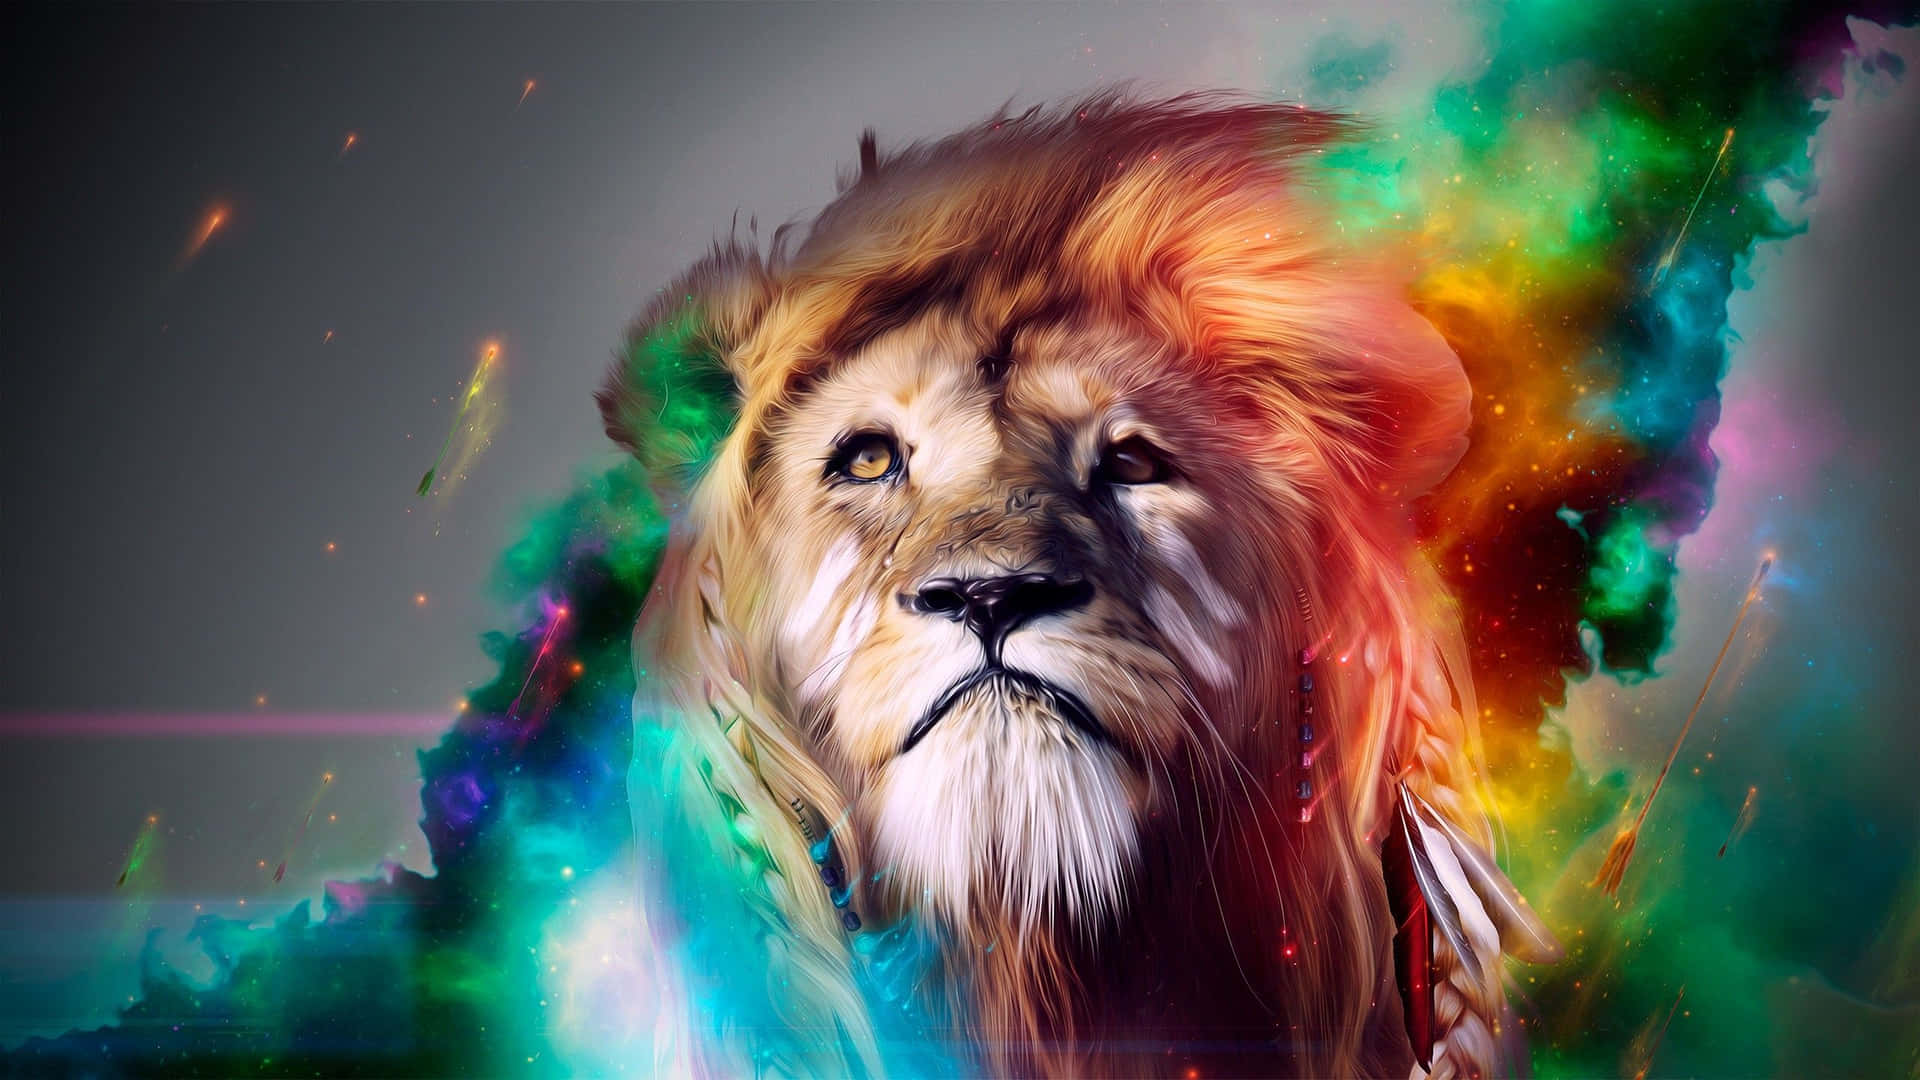 Majestic Lion Of Judah Roaring In Front Of The Ethiopian Flag Wallpaper